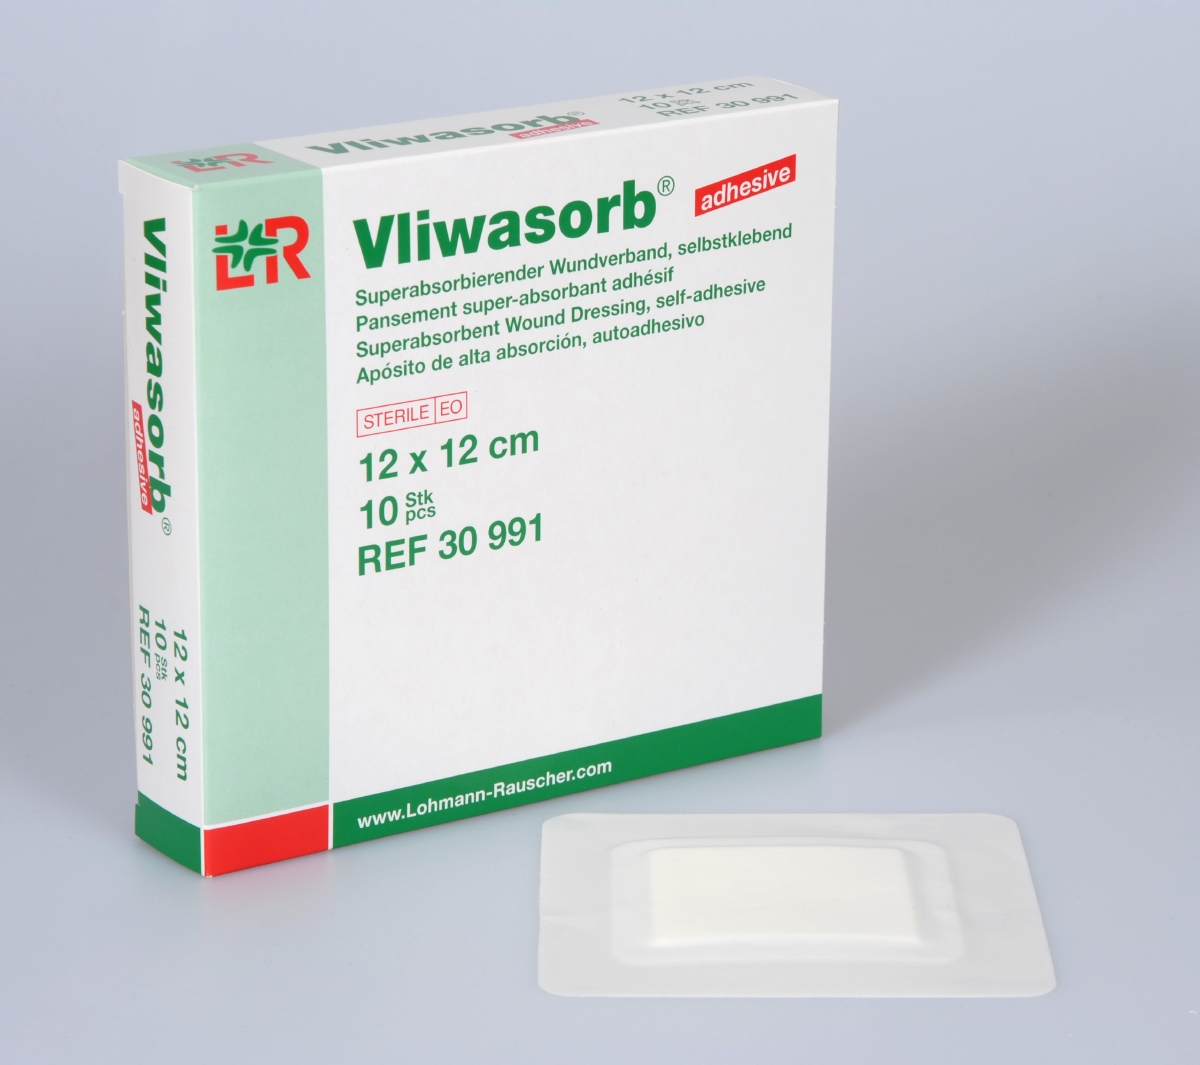 Vliwasorb adhesive Wundverband steril, 12x12cm, 10 Stück